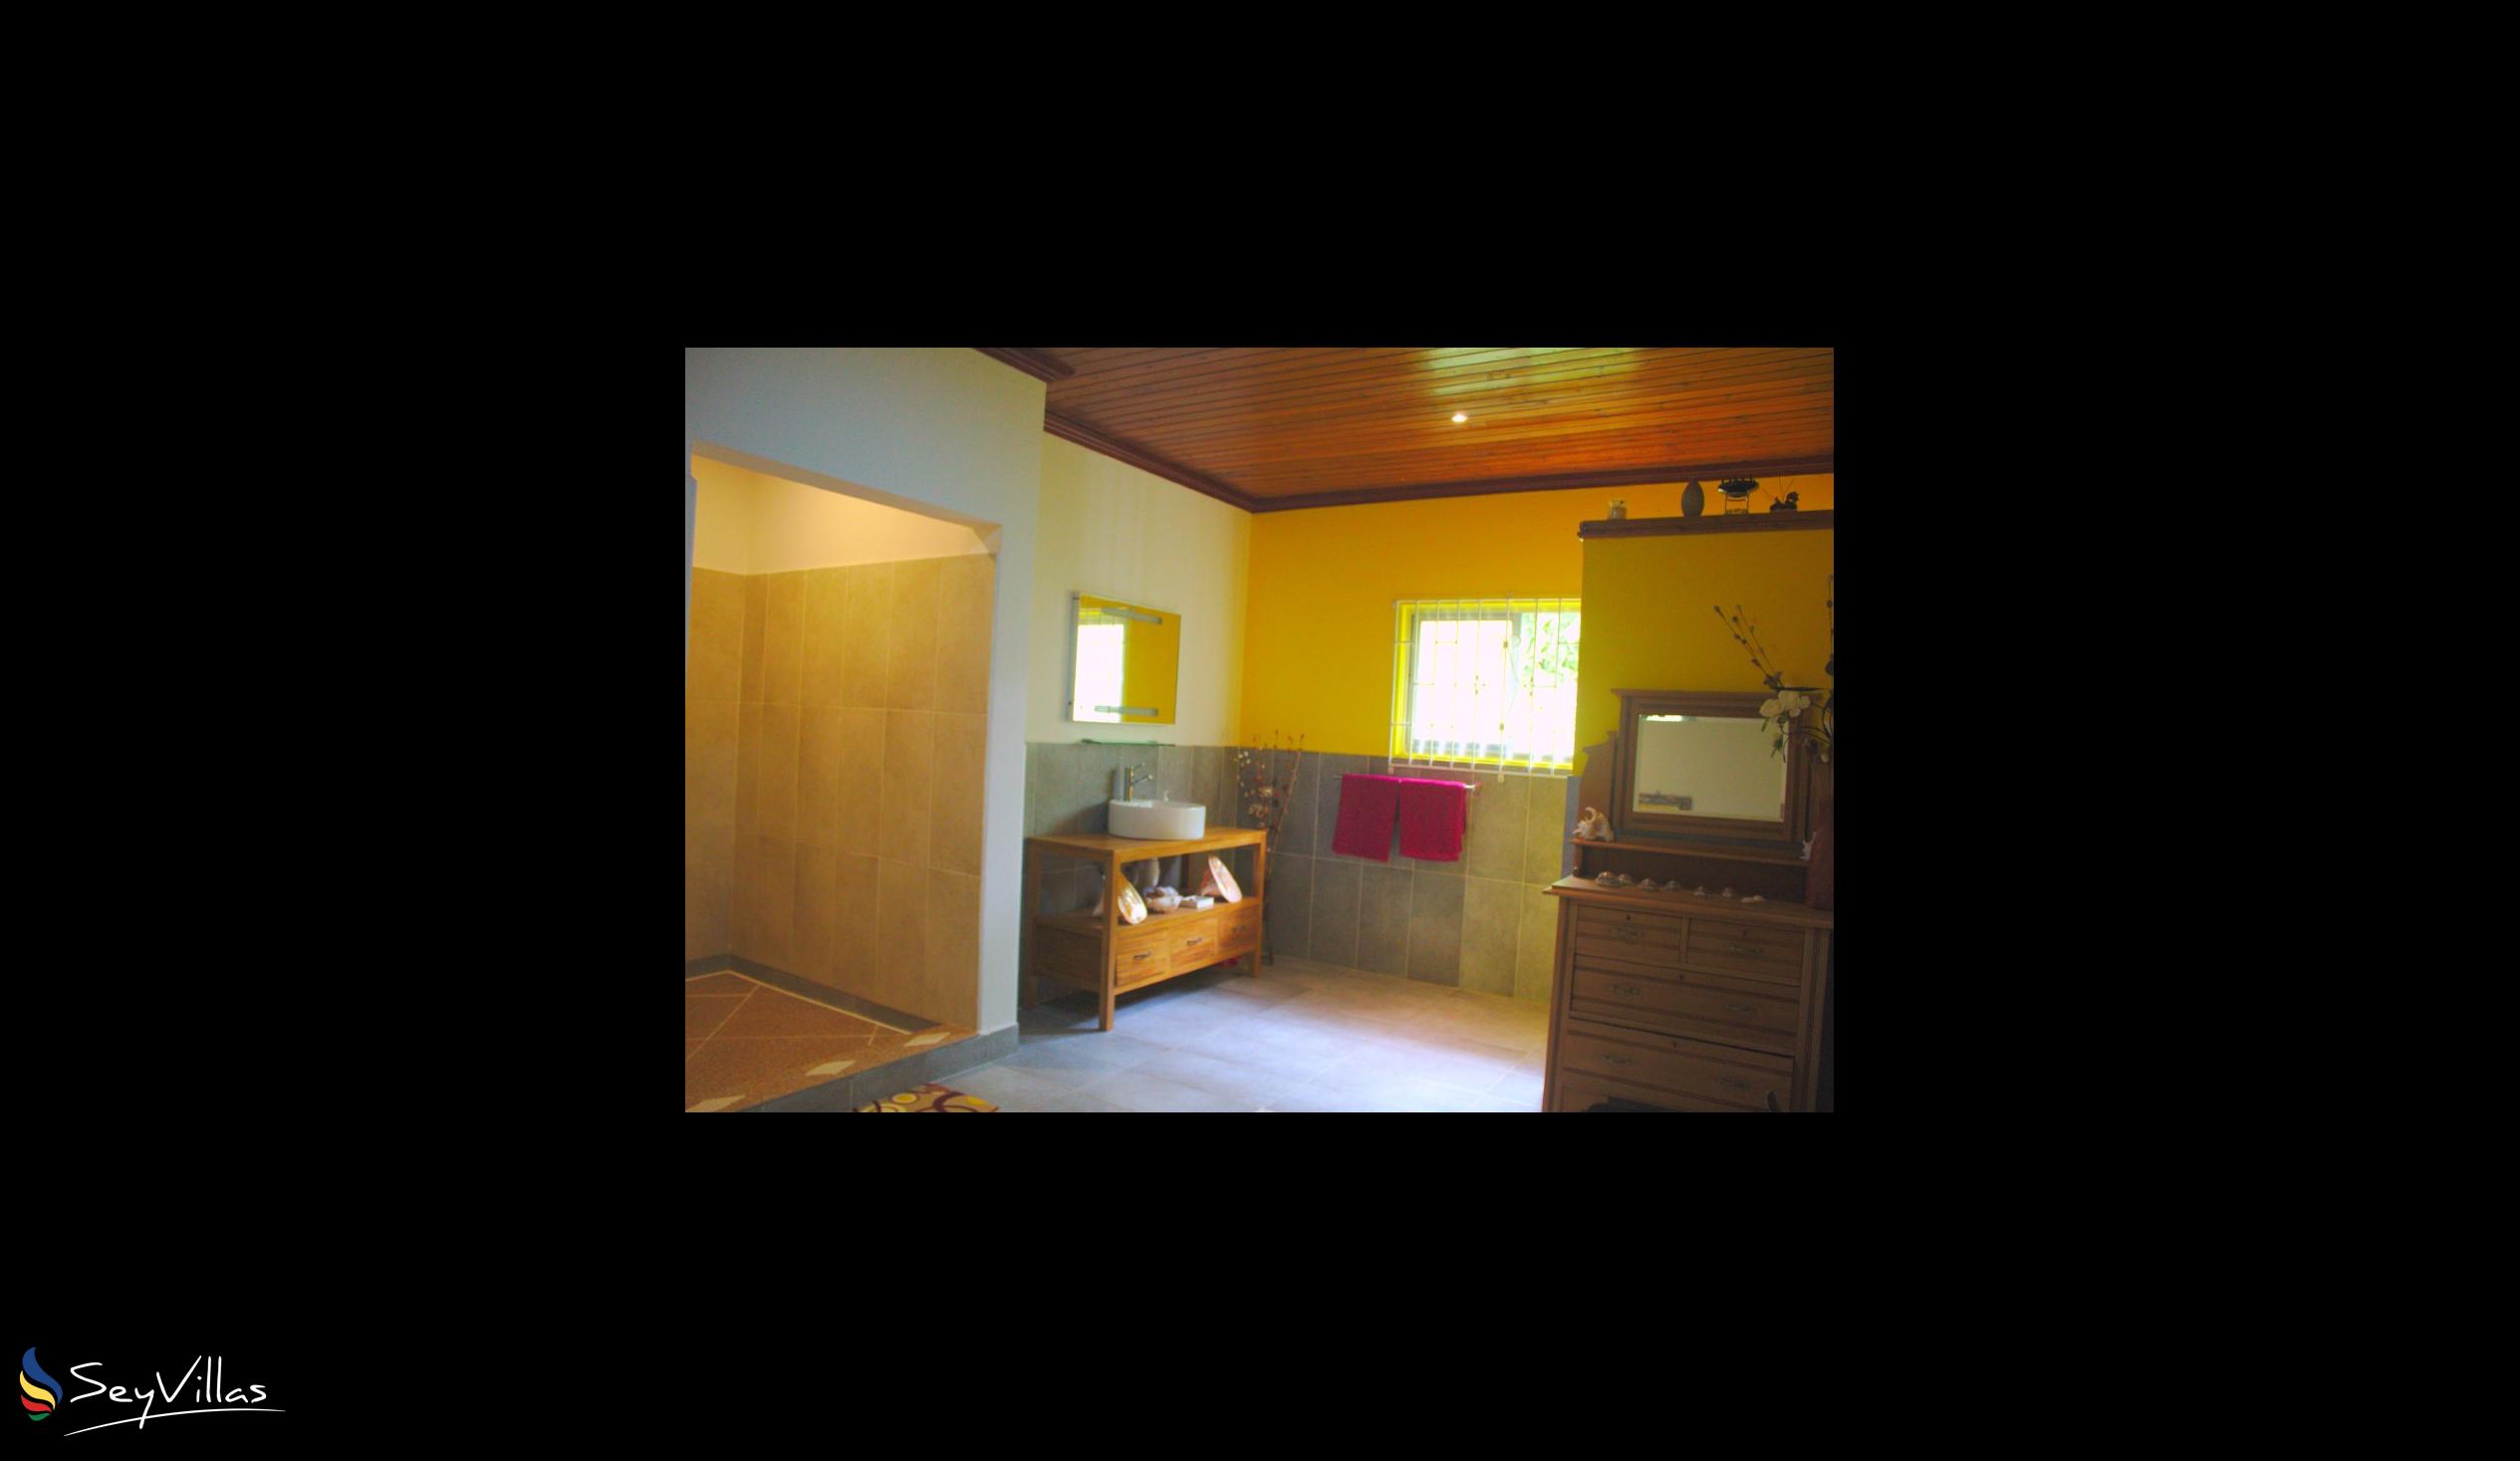 Photo 67: Nid'Aigle Lodge - Small Apartment - Praslin (Seychelles)